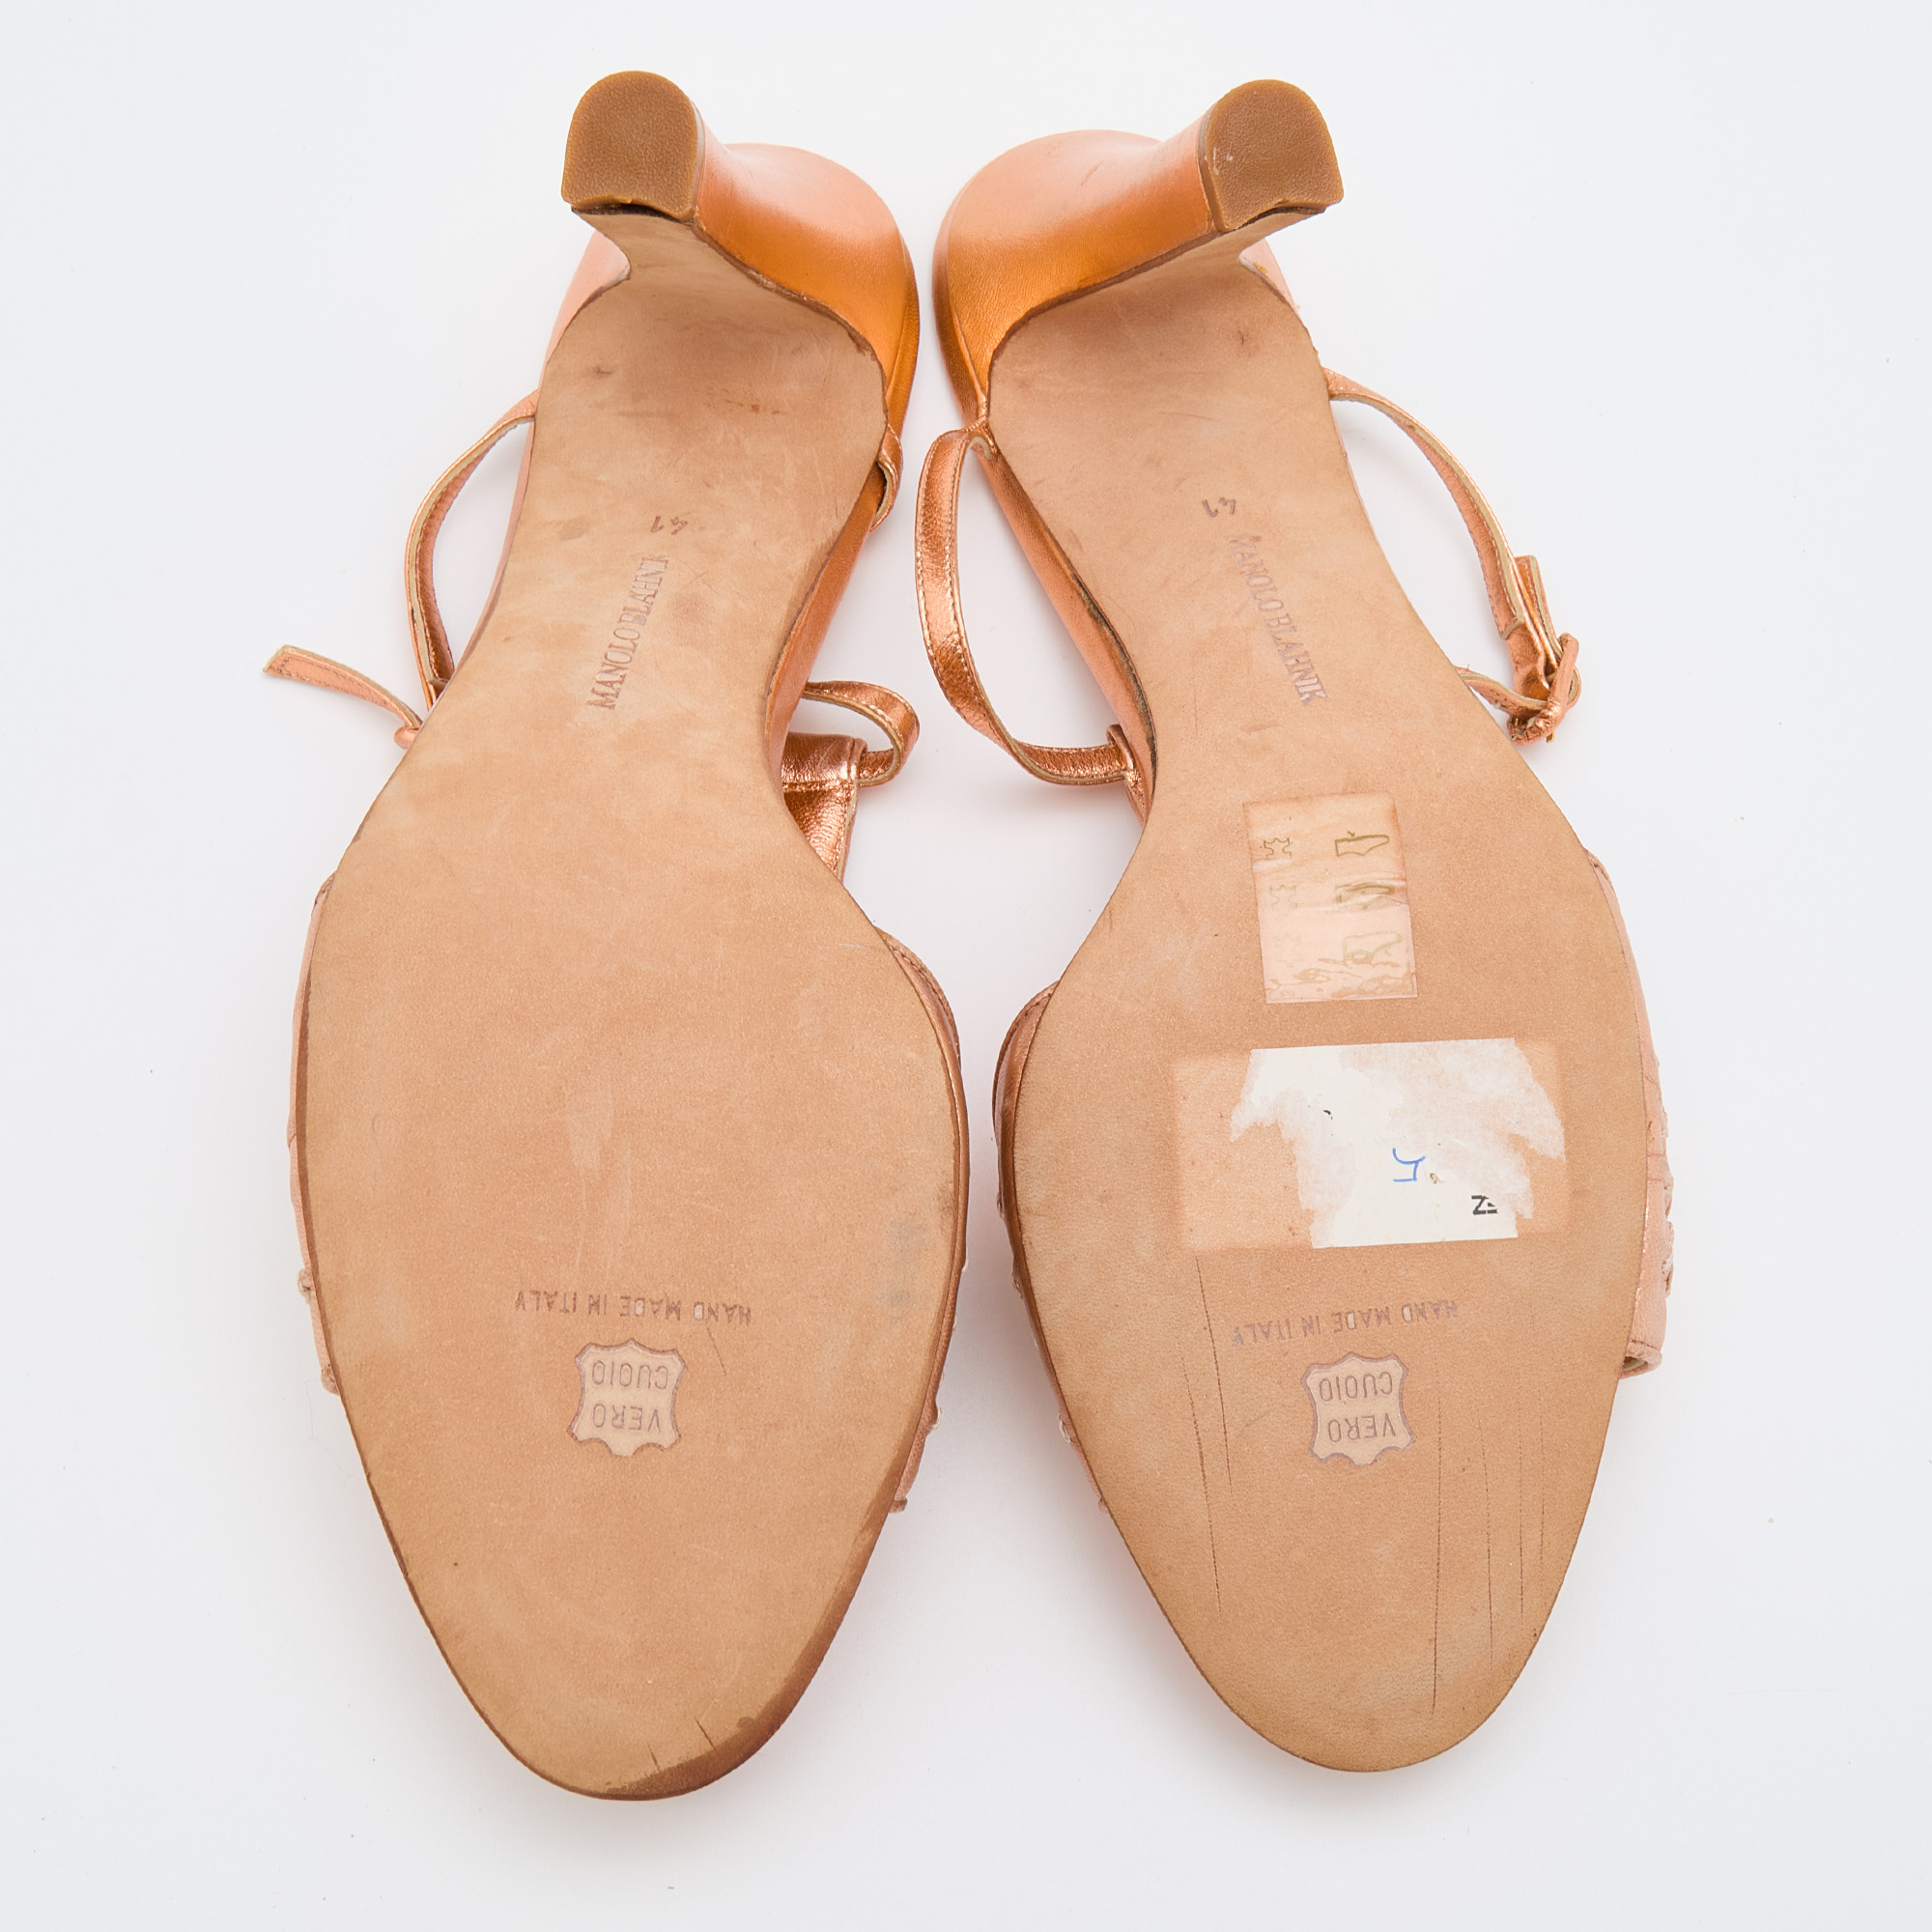 Manolo Blahnik Metallic Bronze Woven Leather T-Strap Sandals Size 41